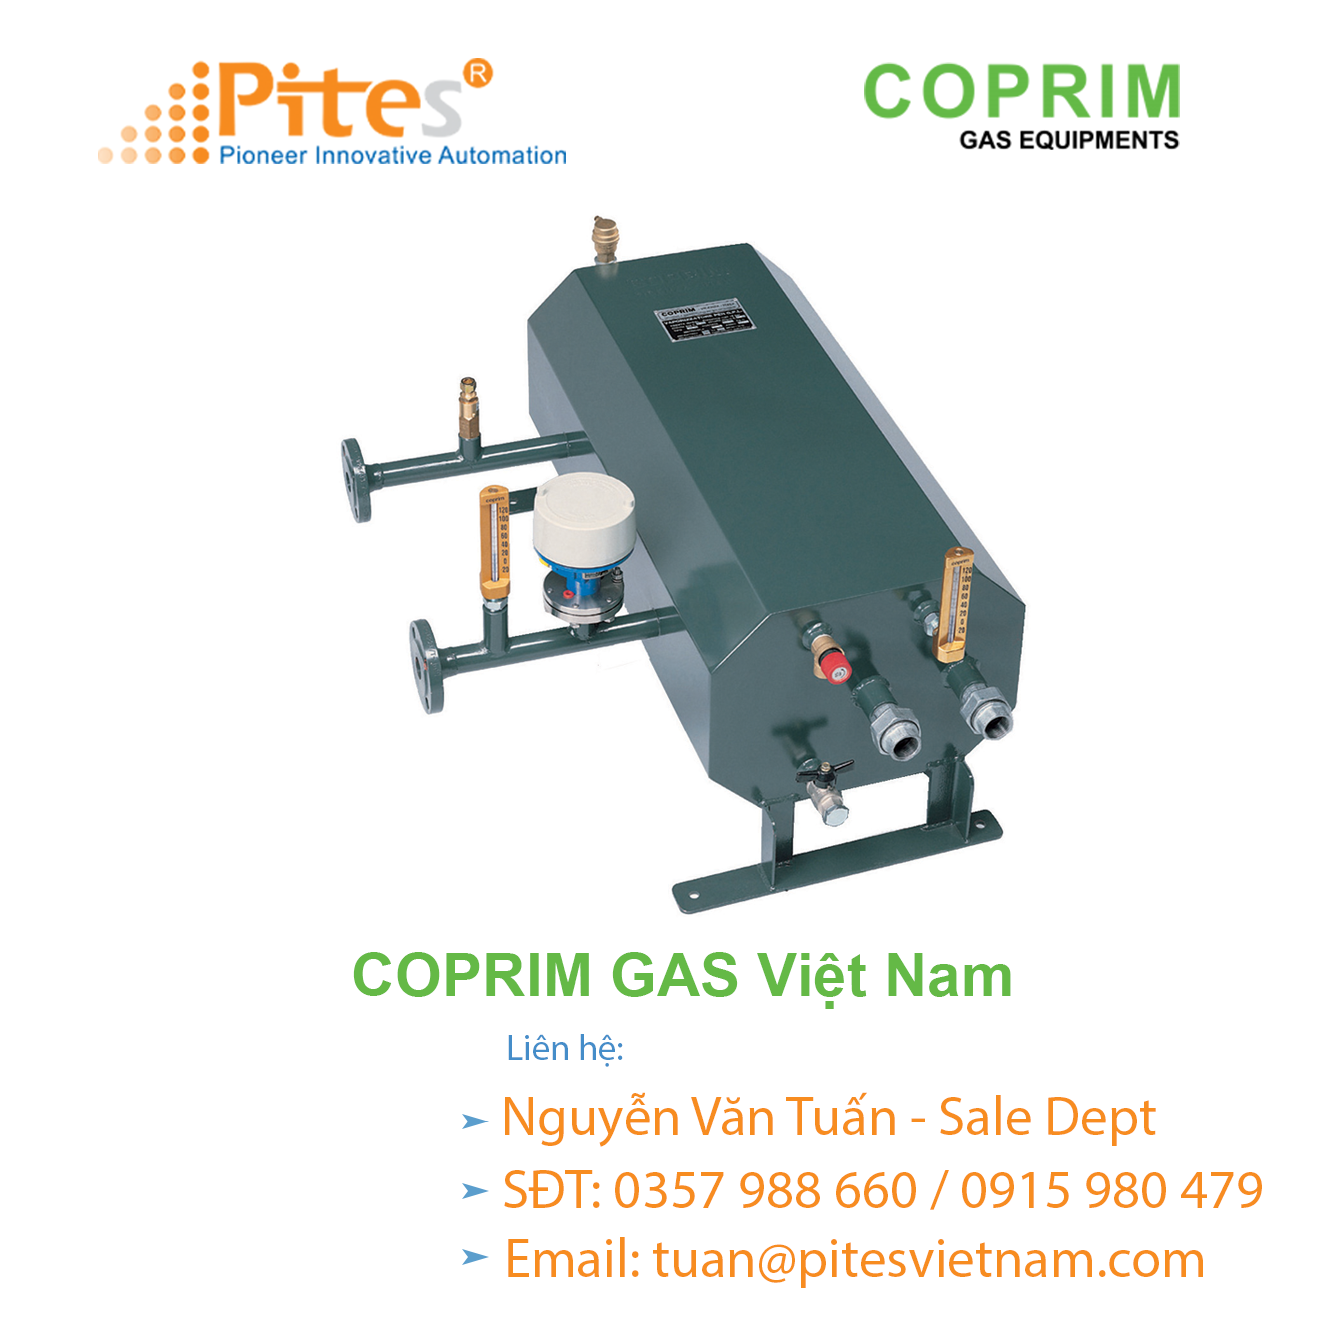 coprim-gas-vietnam-coprim-gas-viet-nam-dai-ly-coprim-gas-list-code-coprim-gas-part-9-1.png